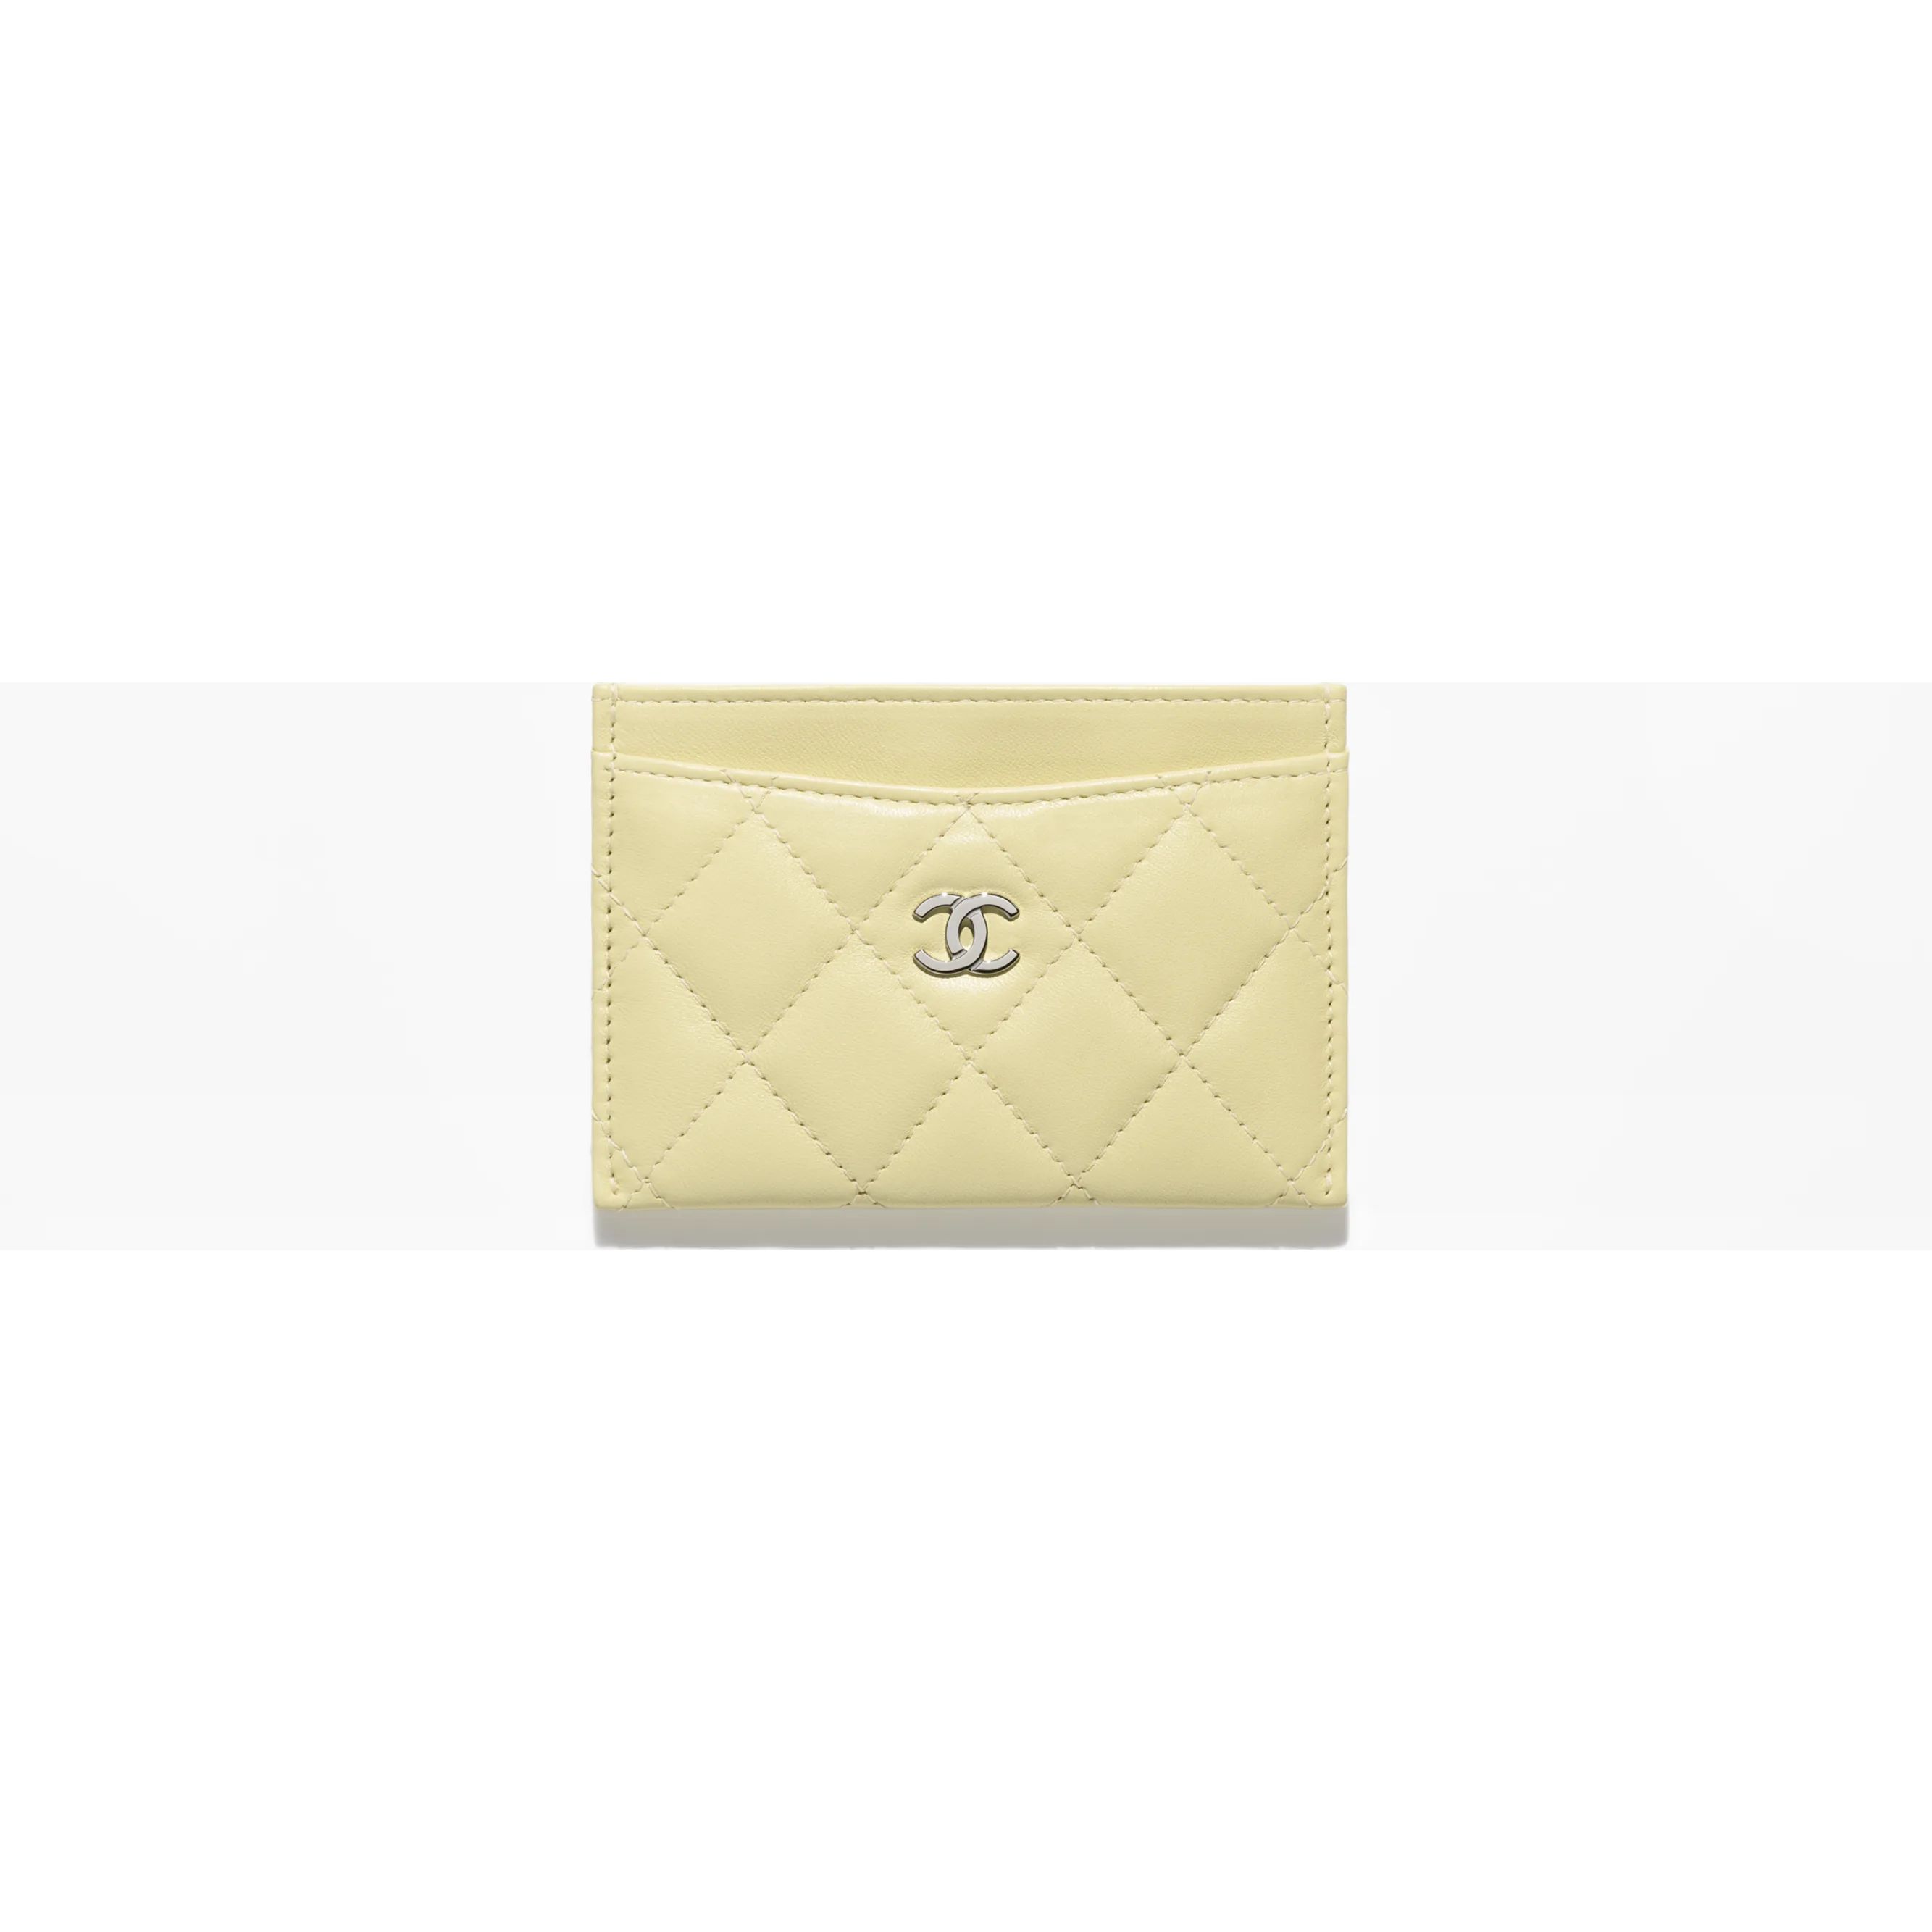 Classic card holder - Lambskin & silver-tone metal, yellow — Fashion | CHANEL | Chanel, Inc. (US)